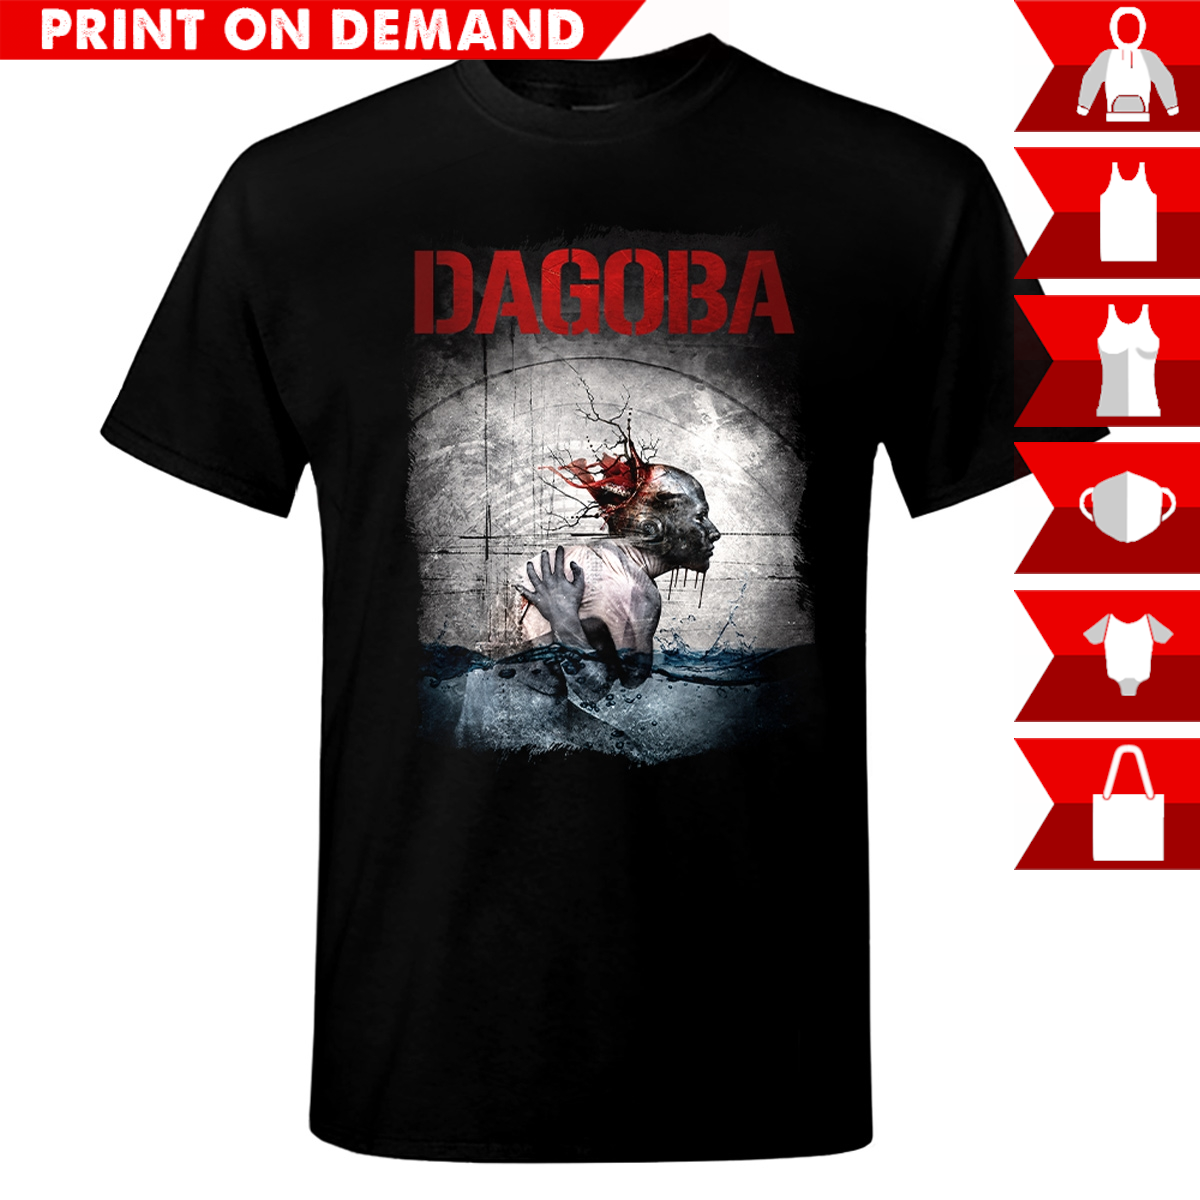 Dagoba - Post Mortem Nihil Est 3 - Print on demand